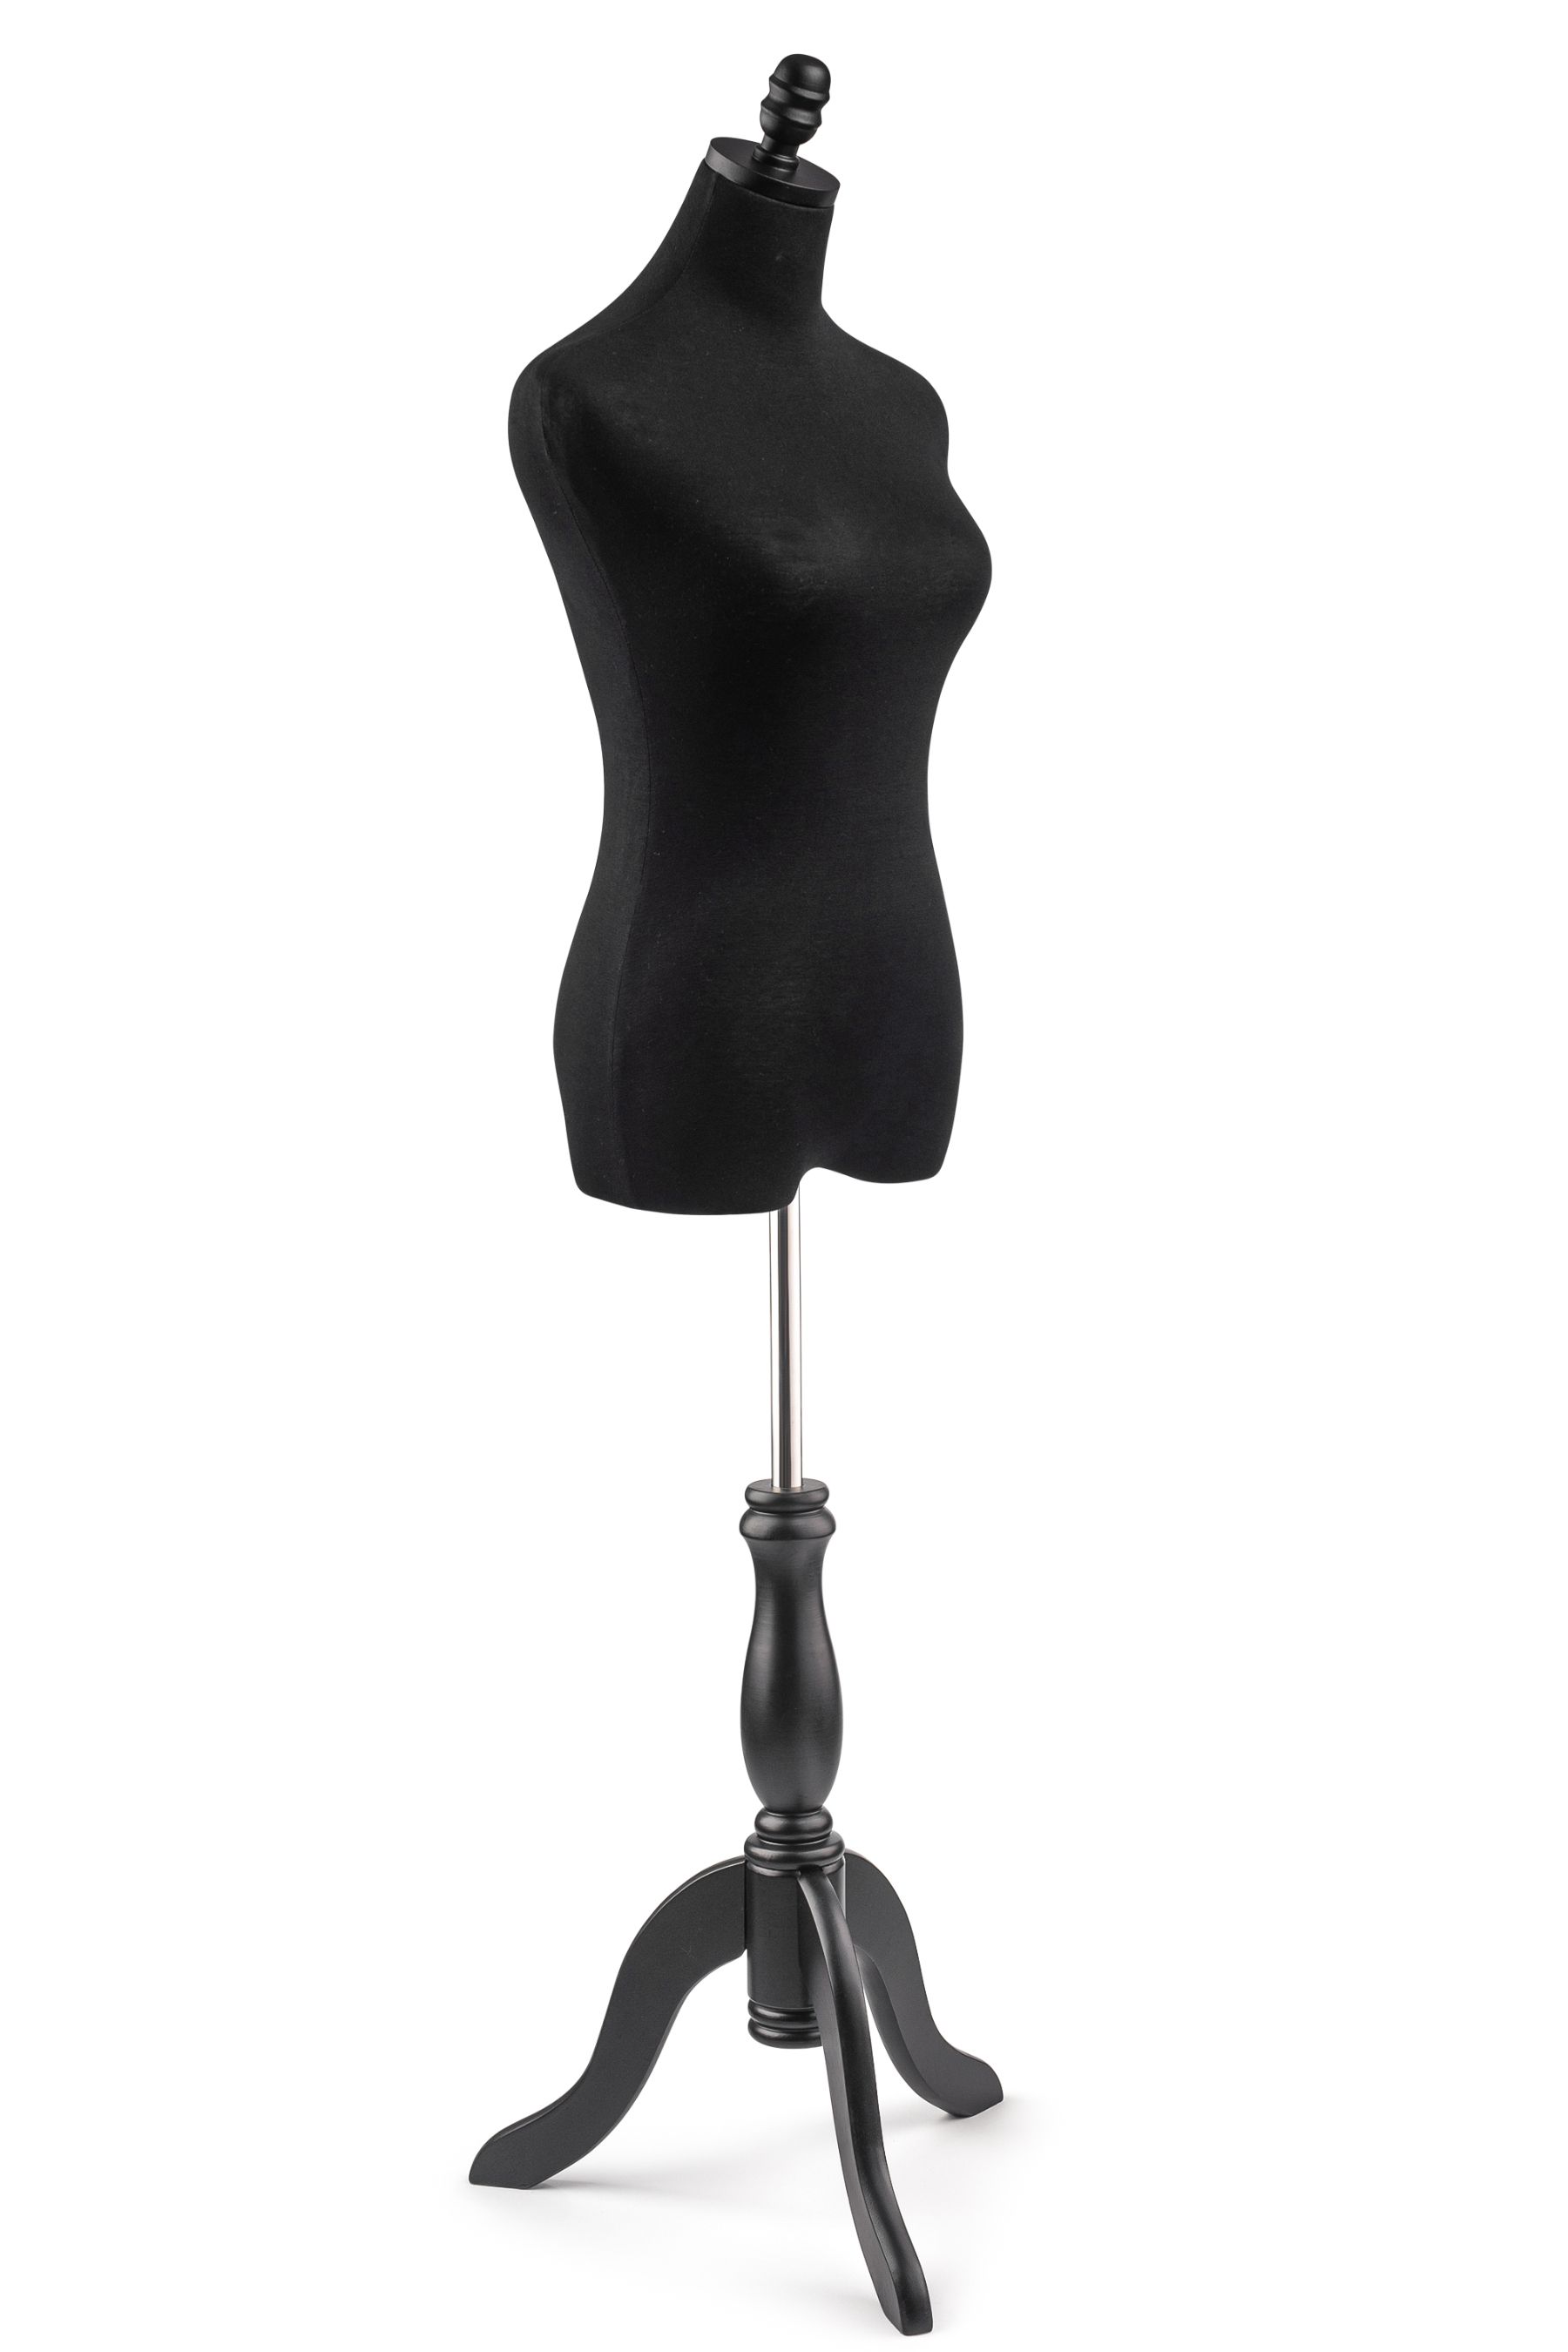 black base Dress Forms Black wooden tripod stand for Torsos MH 